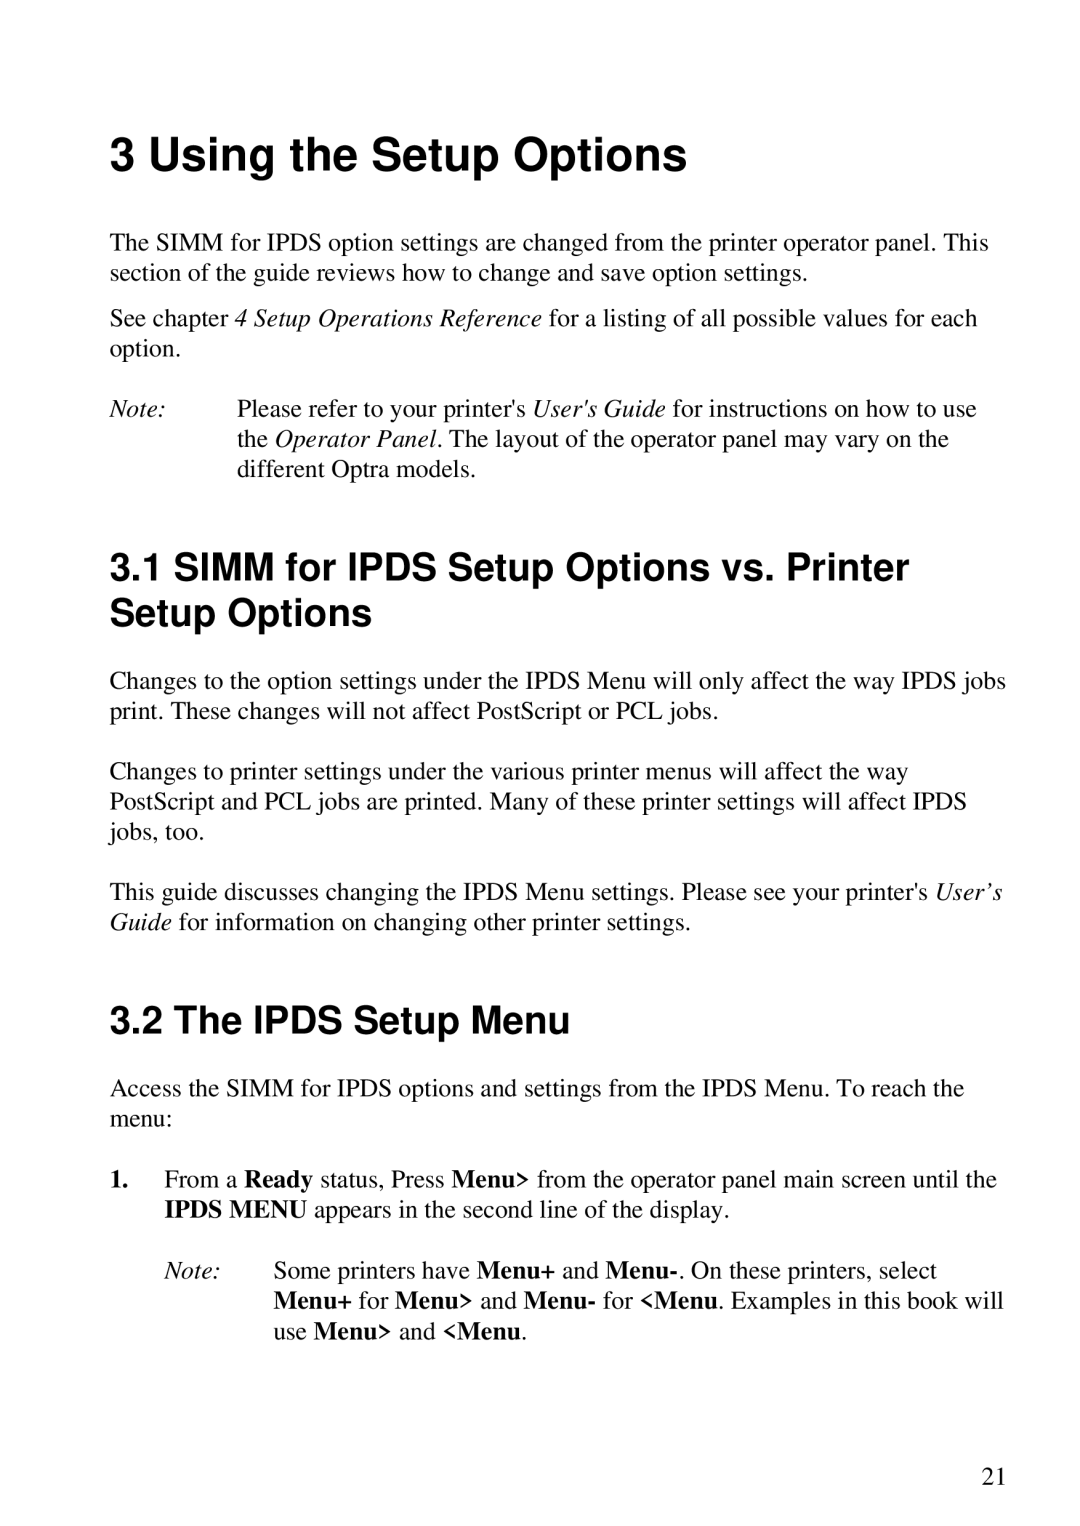 Lexmark Se 3455, K 1220 manual Simm for Ipds Setup Options vs. Printer Setup Options, Ipds Setup Menu 